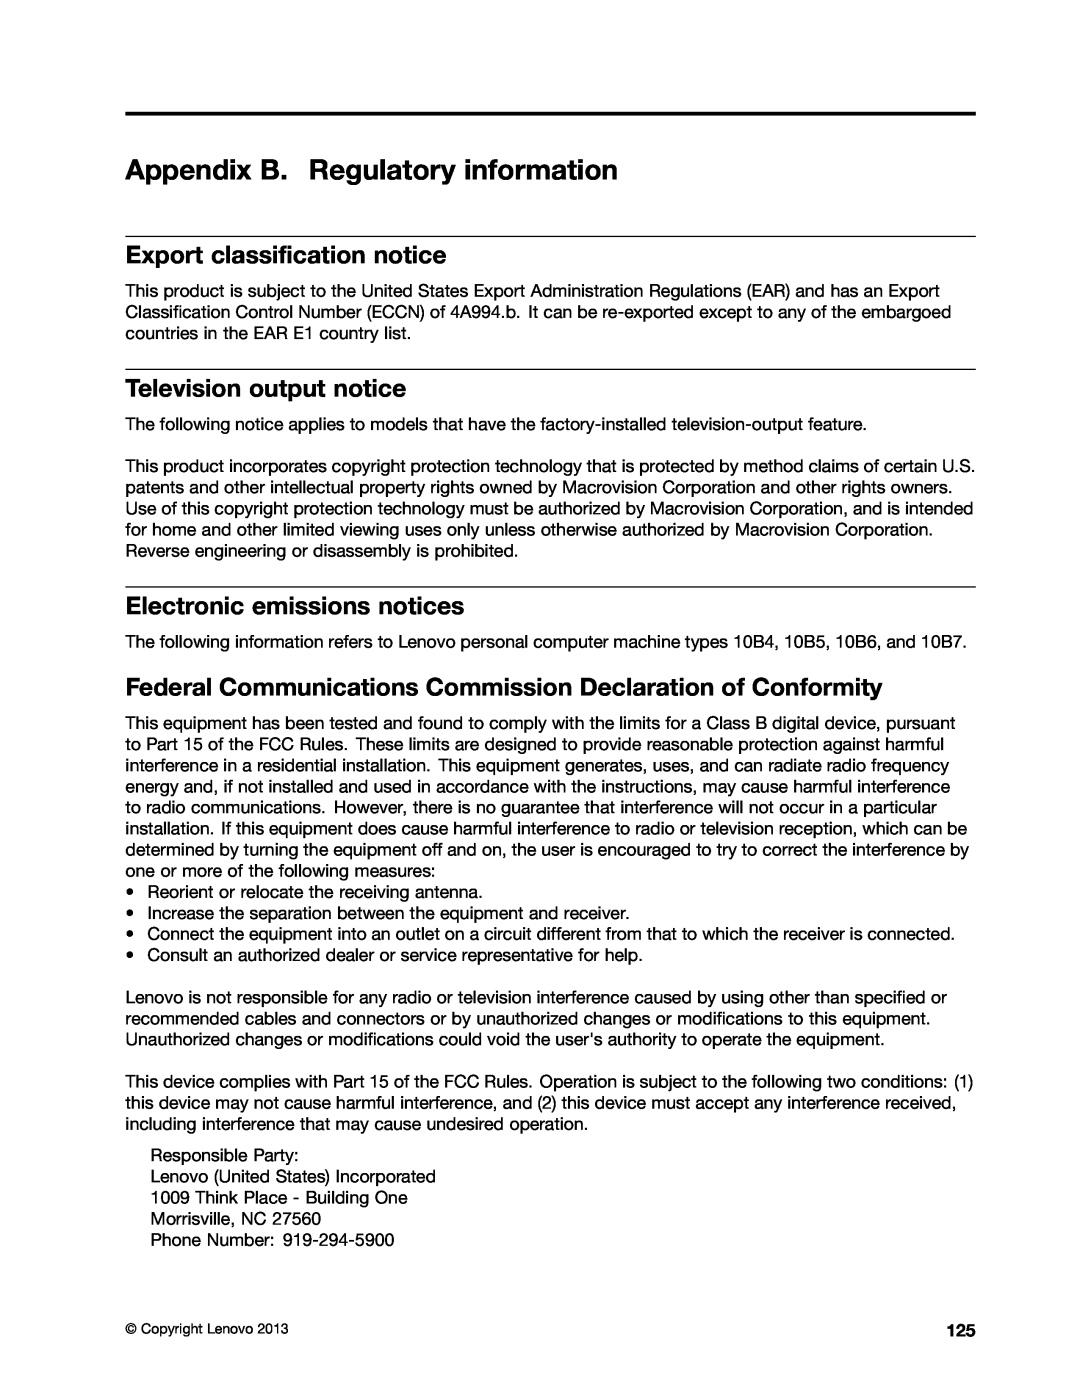 Lenovo M73 manual Appendix B. Regulatory information, Export classification notice, Television output notice 